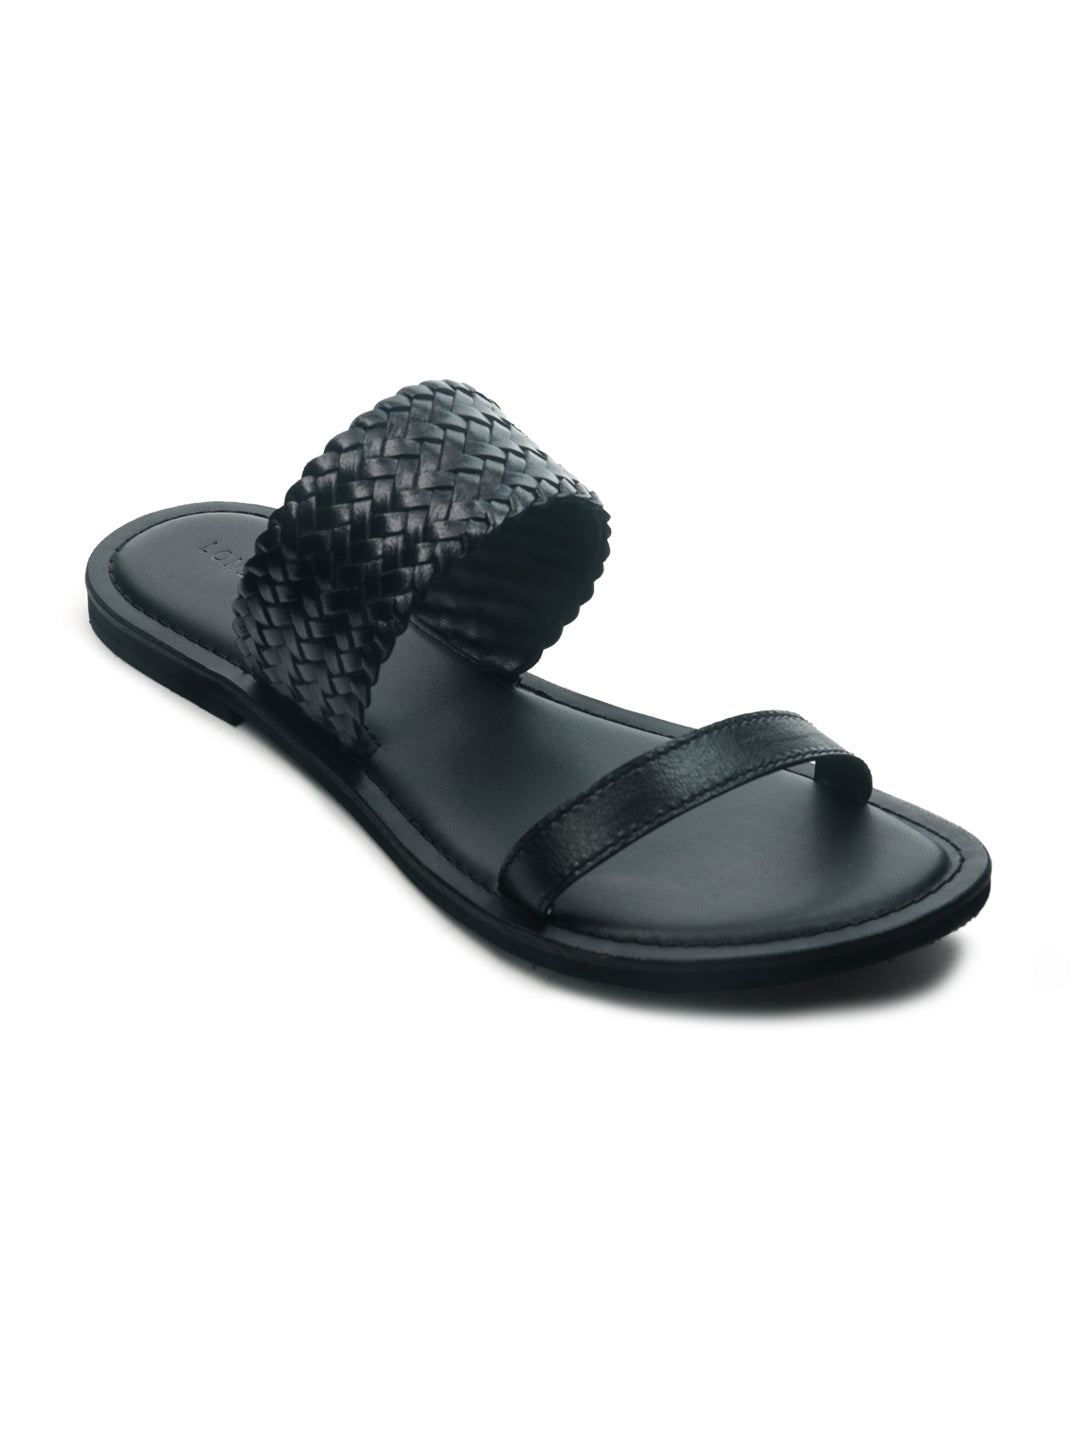 Black Weaved Strap Sandal - Black